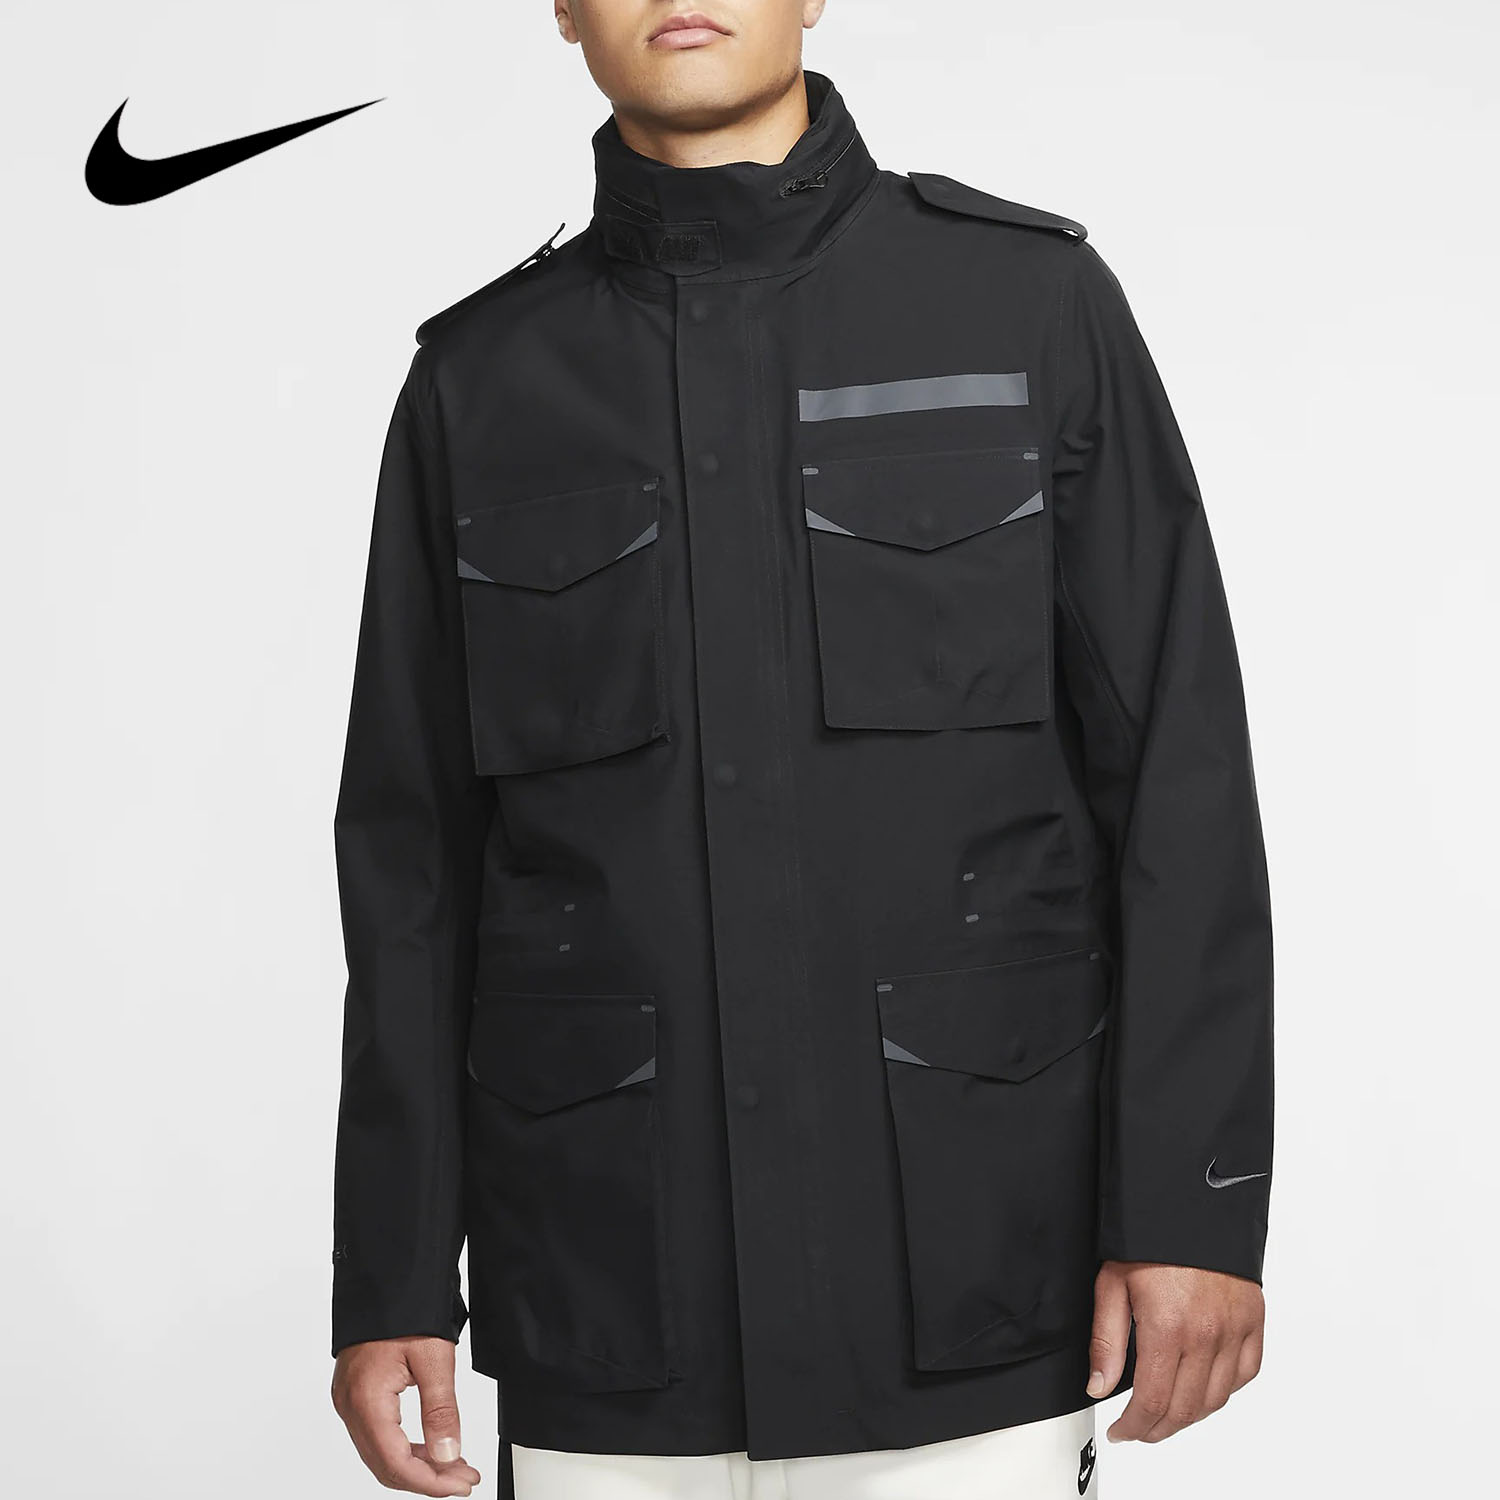 Nike/耐克正品新款 GORE-TEX M65男子短款休闲夹克外套CQ7653